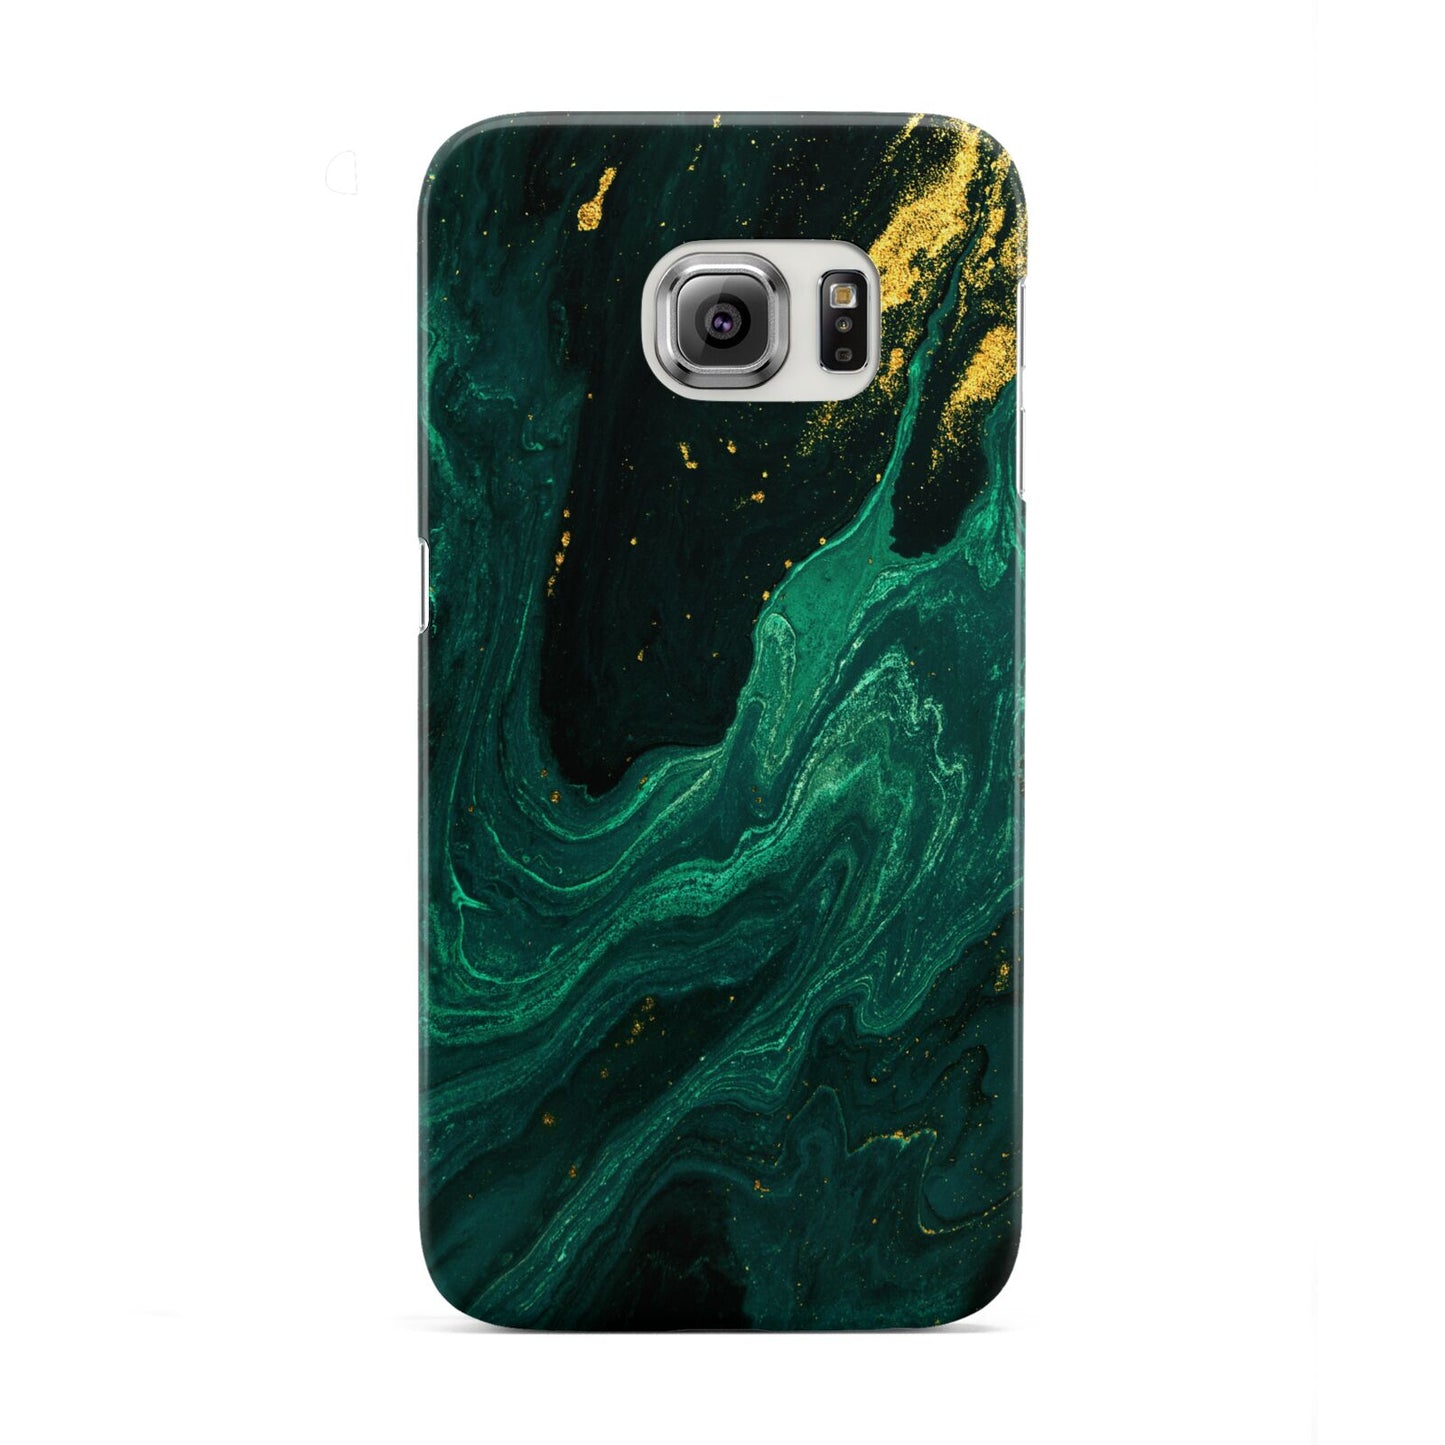 Emerald Green Samsung Galaxy S6 Edge Case